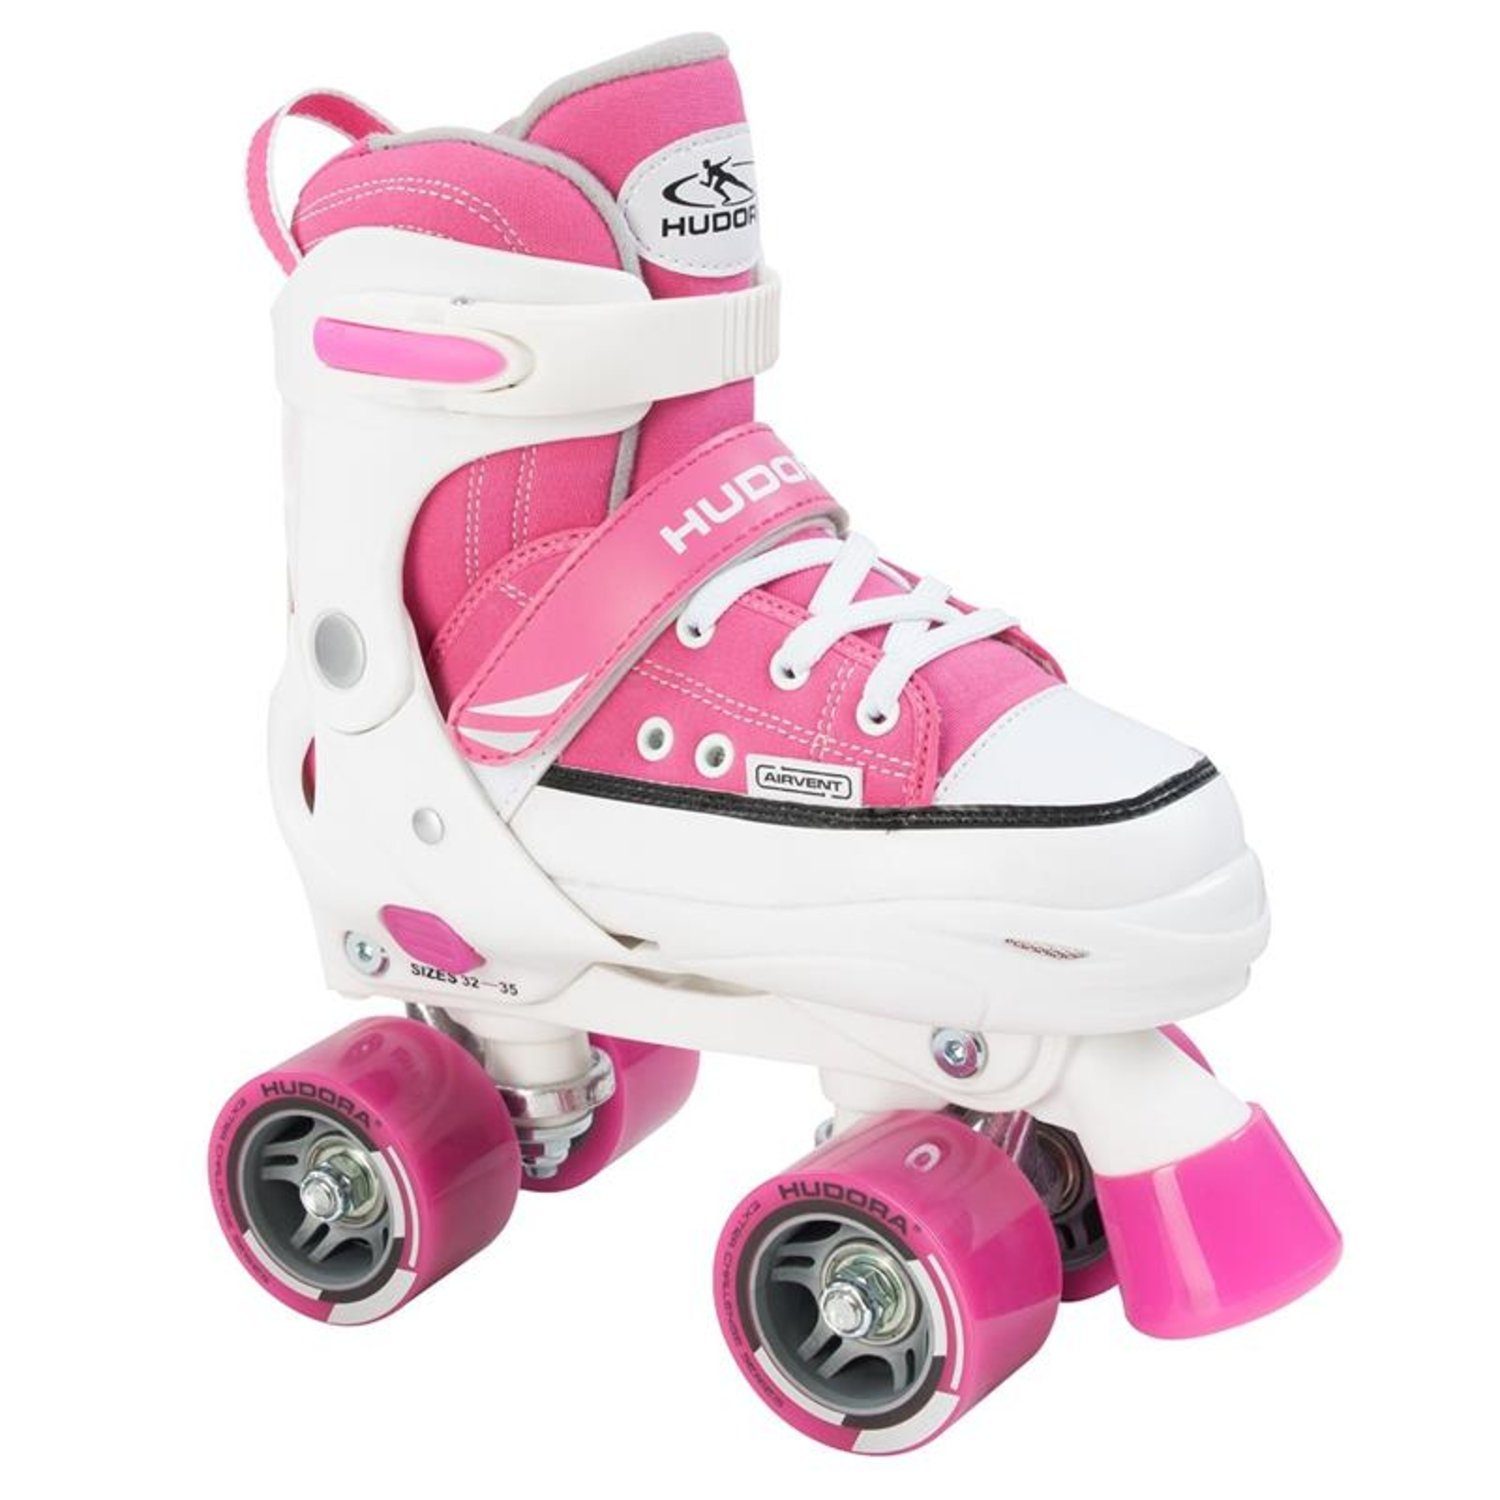 Hudora Inlineskates pink, Roller Skate, Gr. 32-35 22034 verstellbar